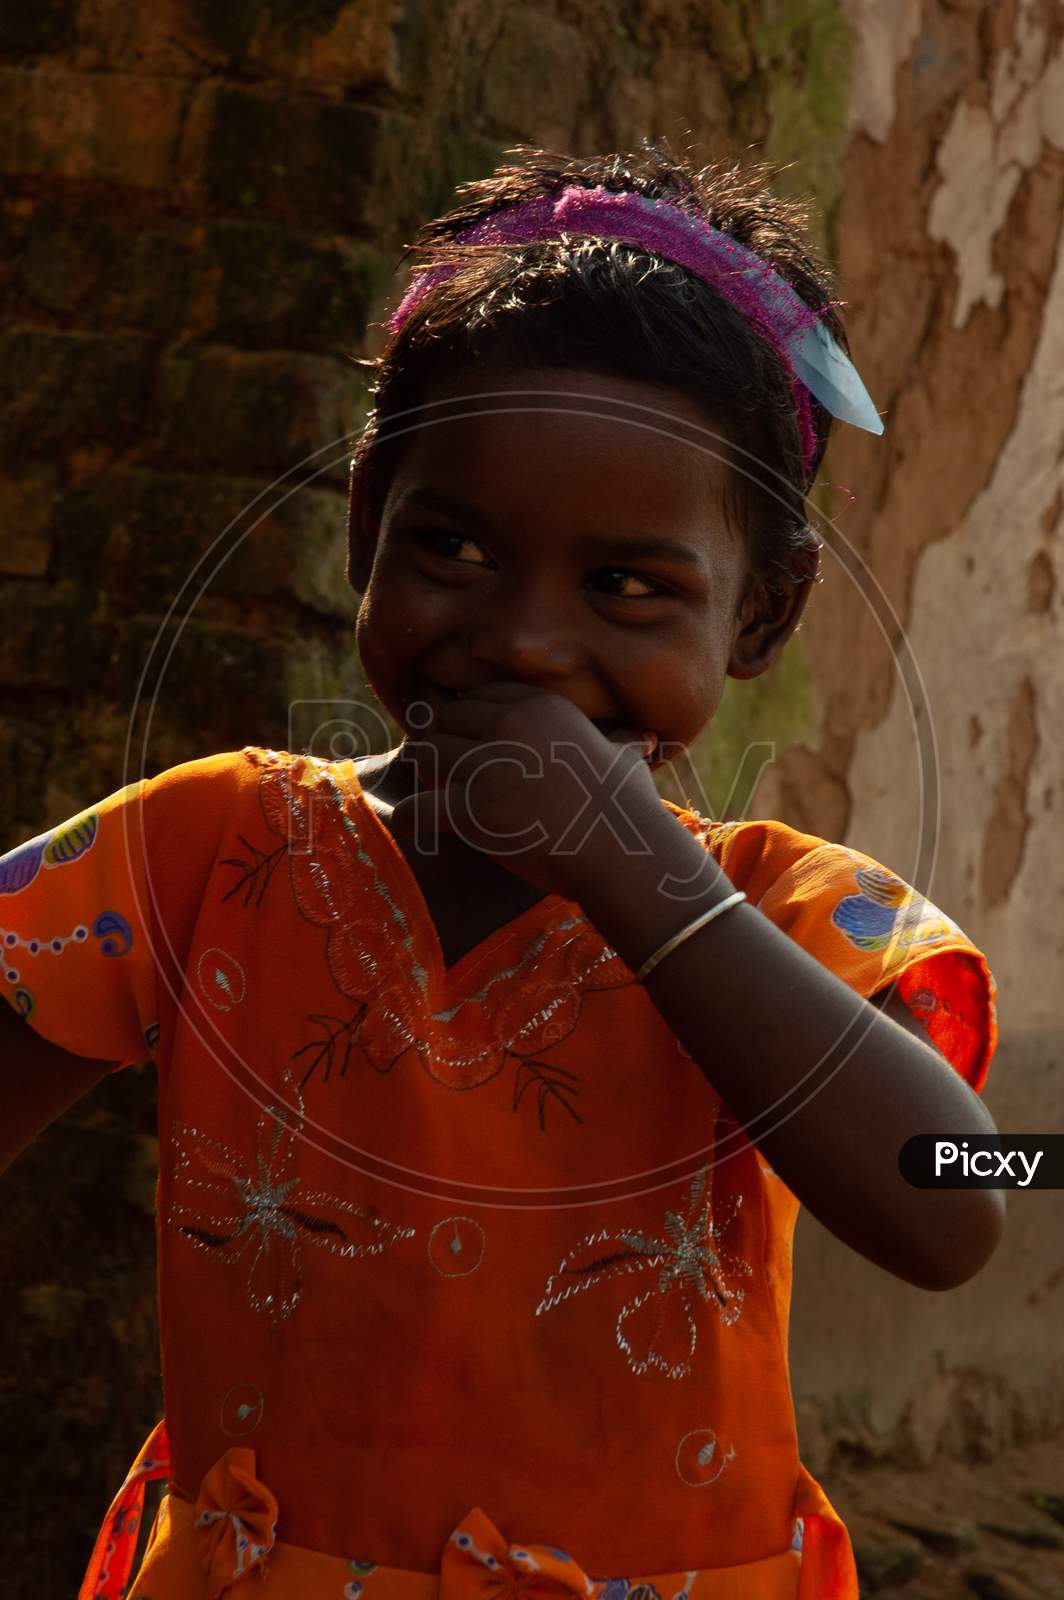 Girl Child In Rural Village of India